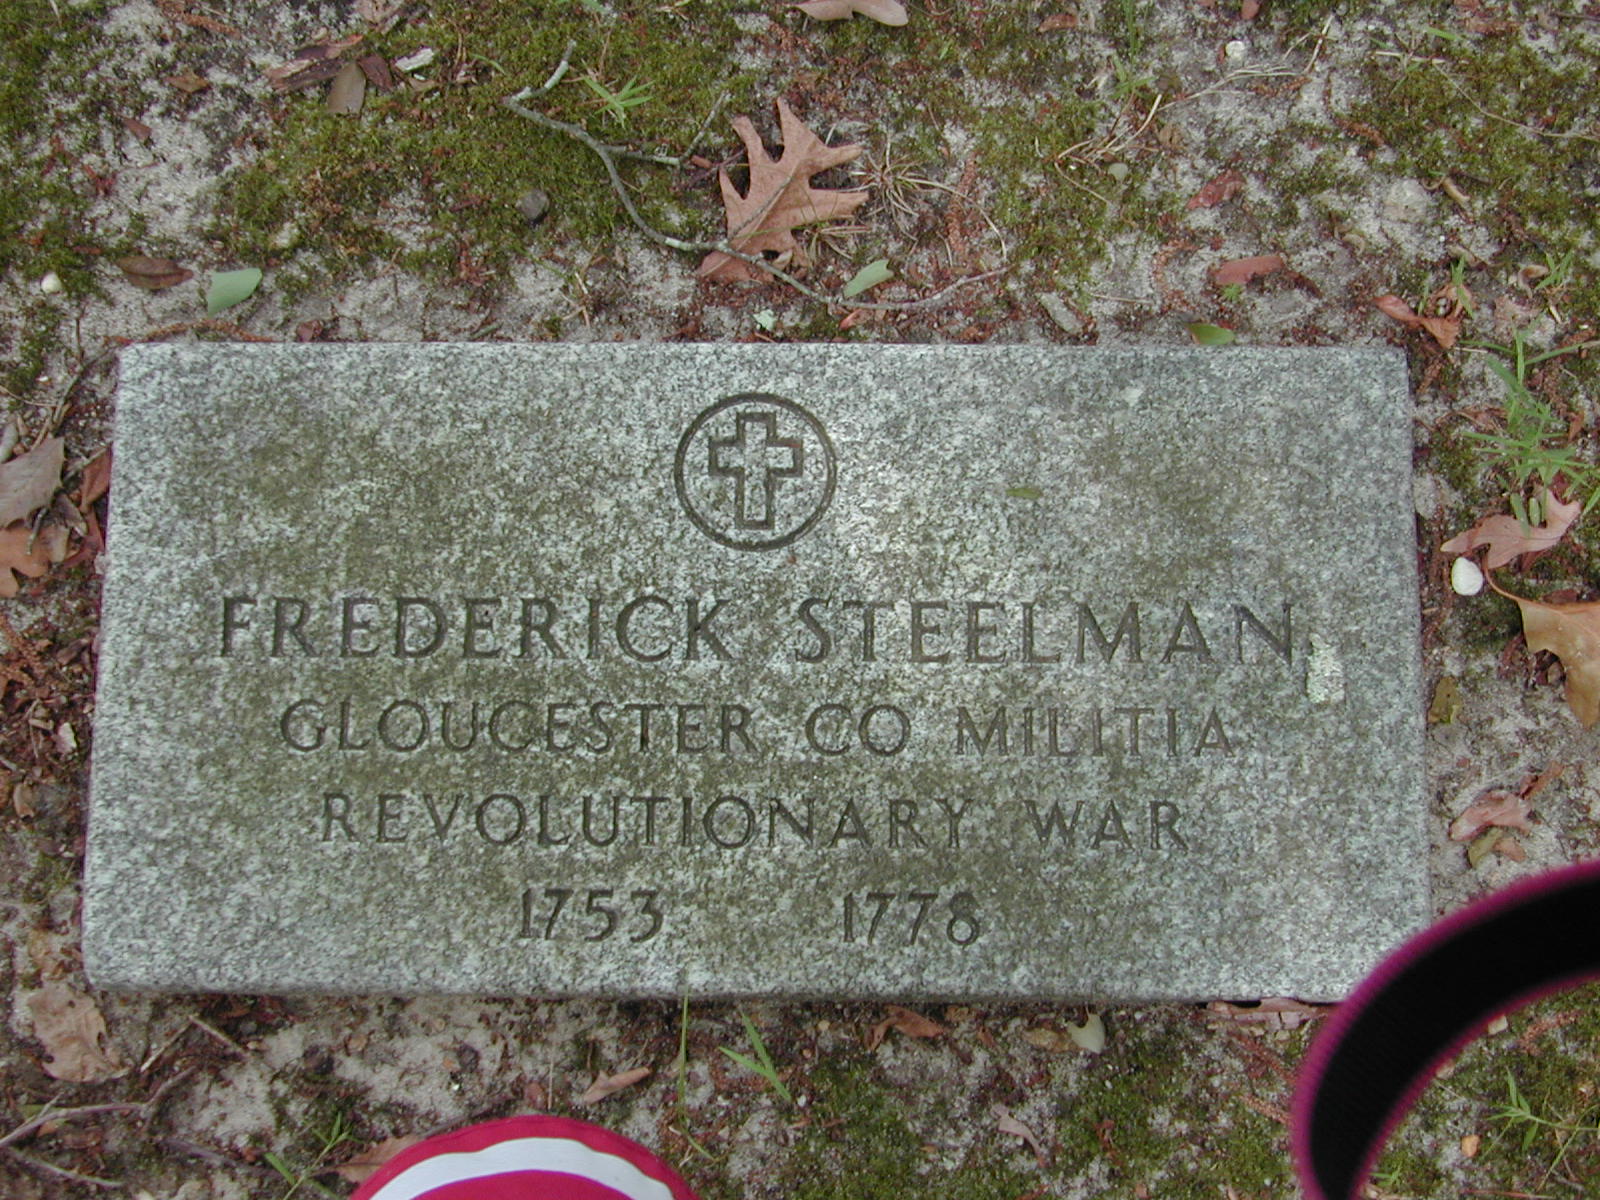 Frederick Steelman